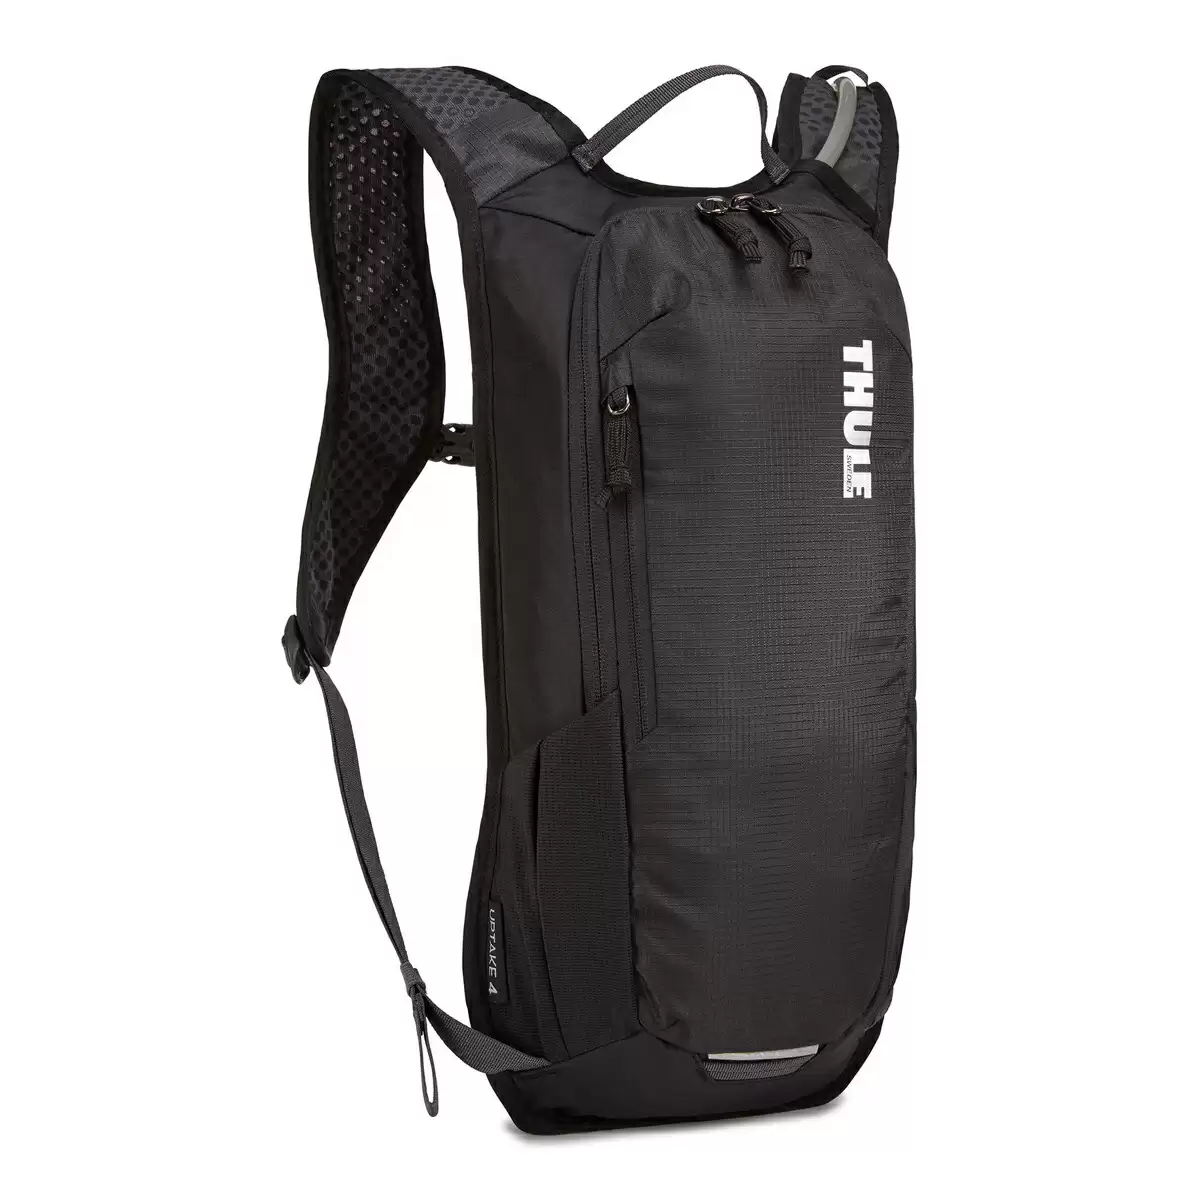 Water backpack UpTake 4L black - image